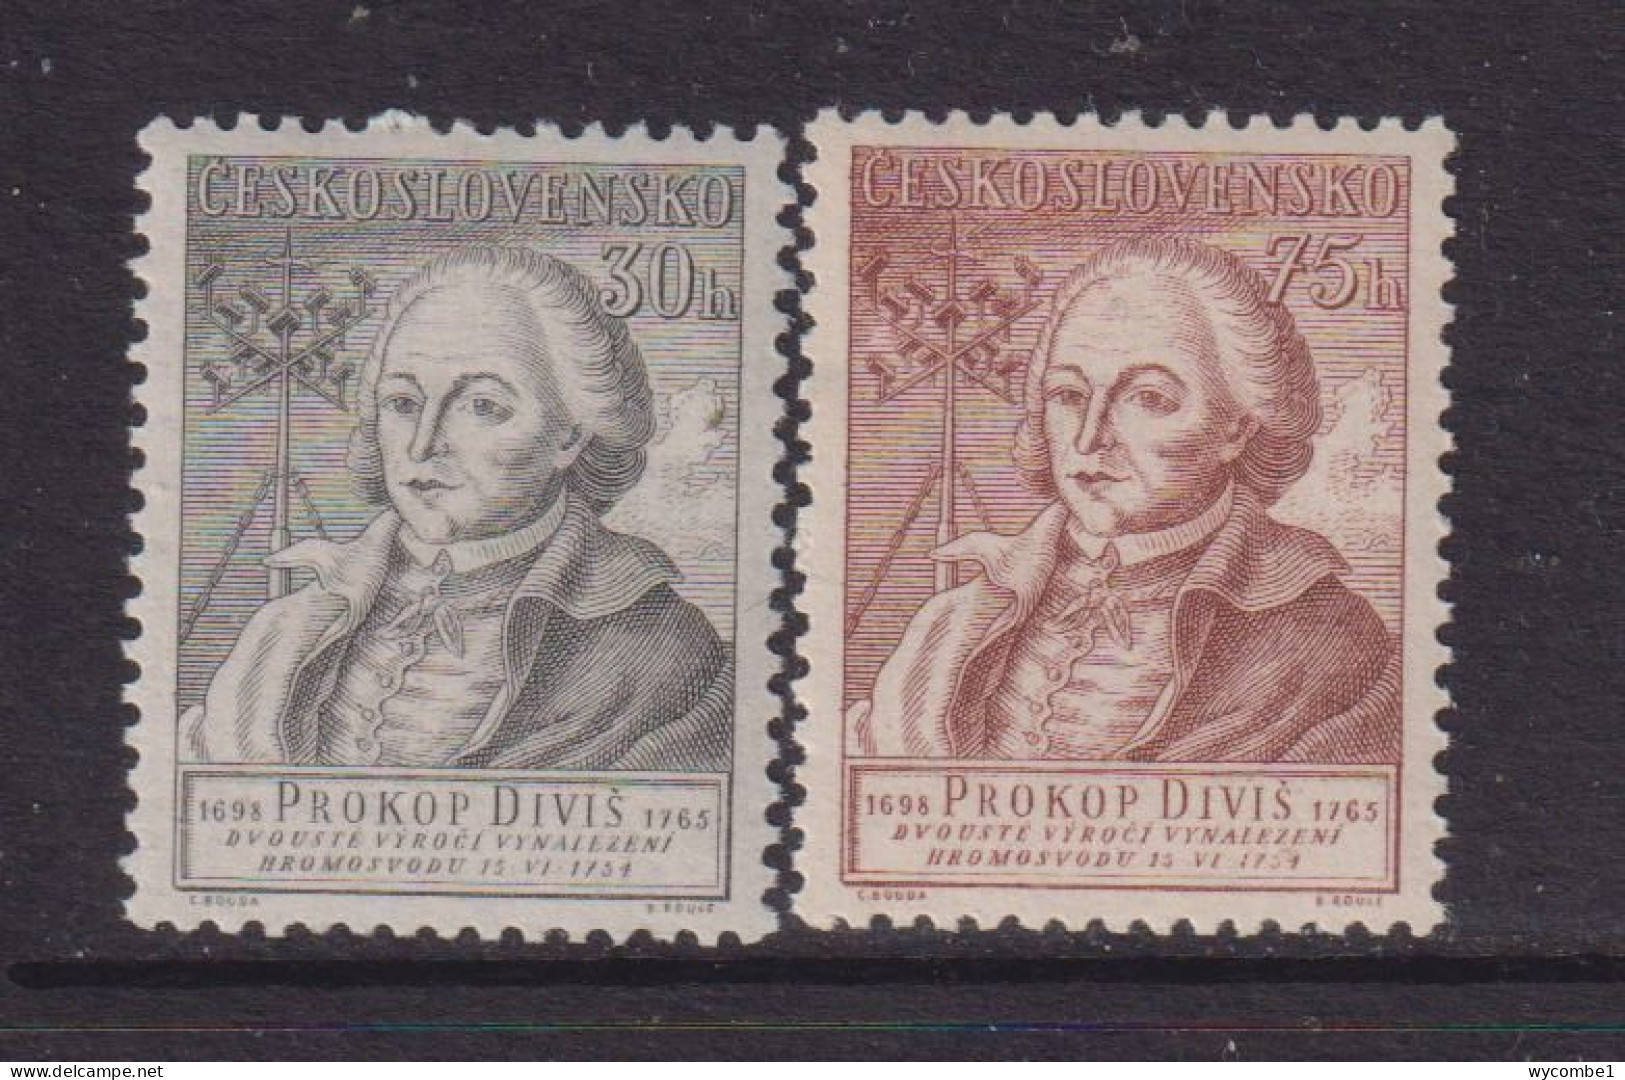 CZECHOSLOVAKIA  - 1954  Divis  Set  Never Hinged Mint - Unused Stamps